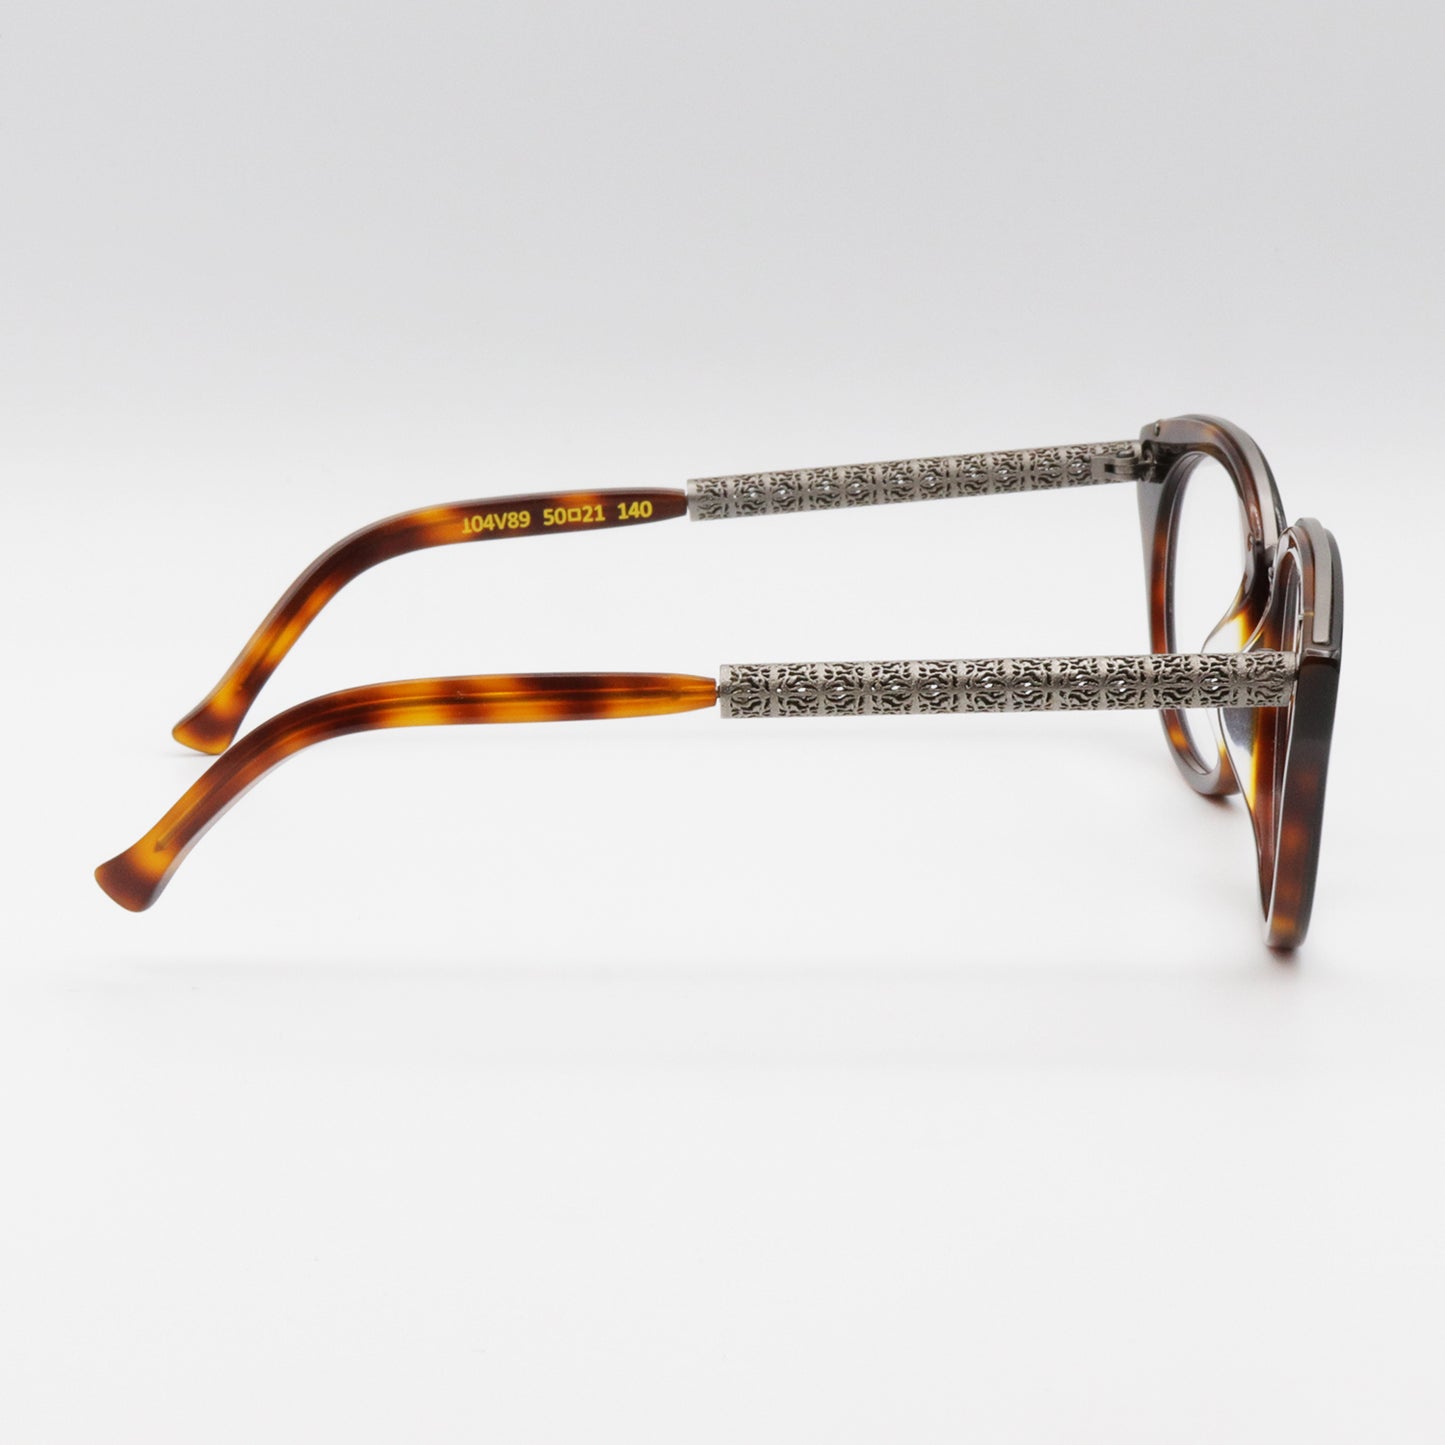 104v Pugnale & Nyleve Women's Eyeglasses